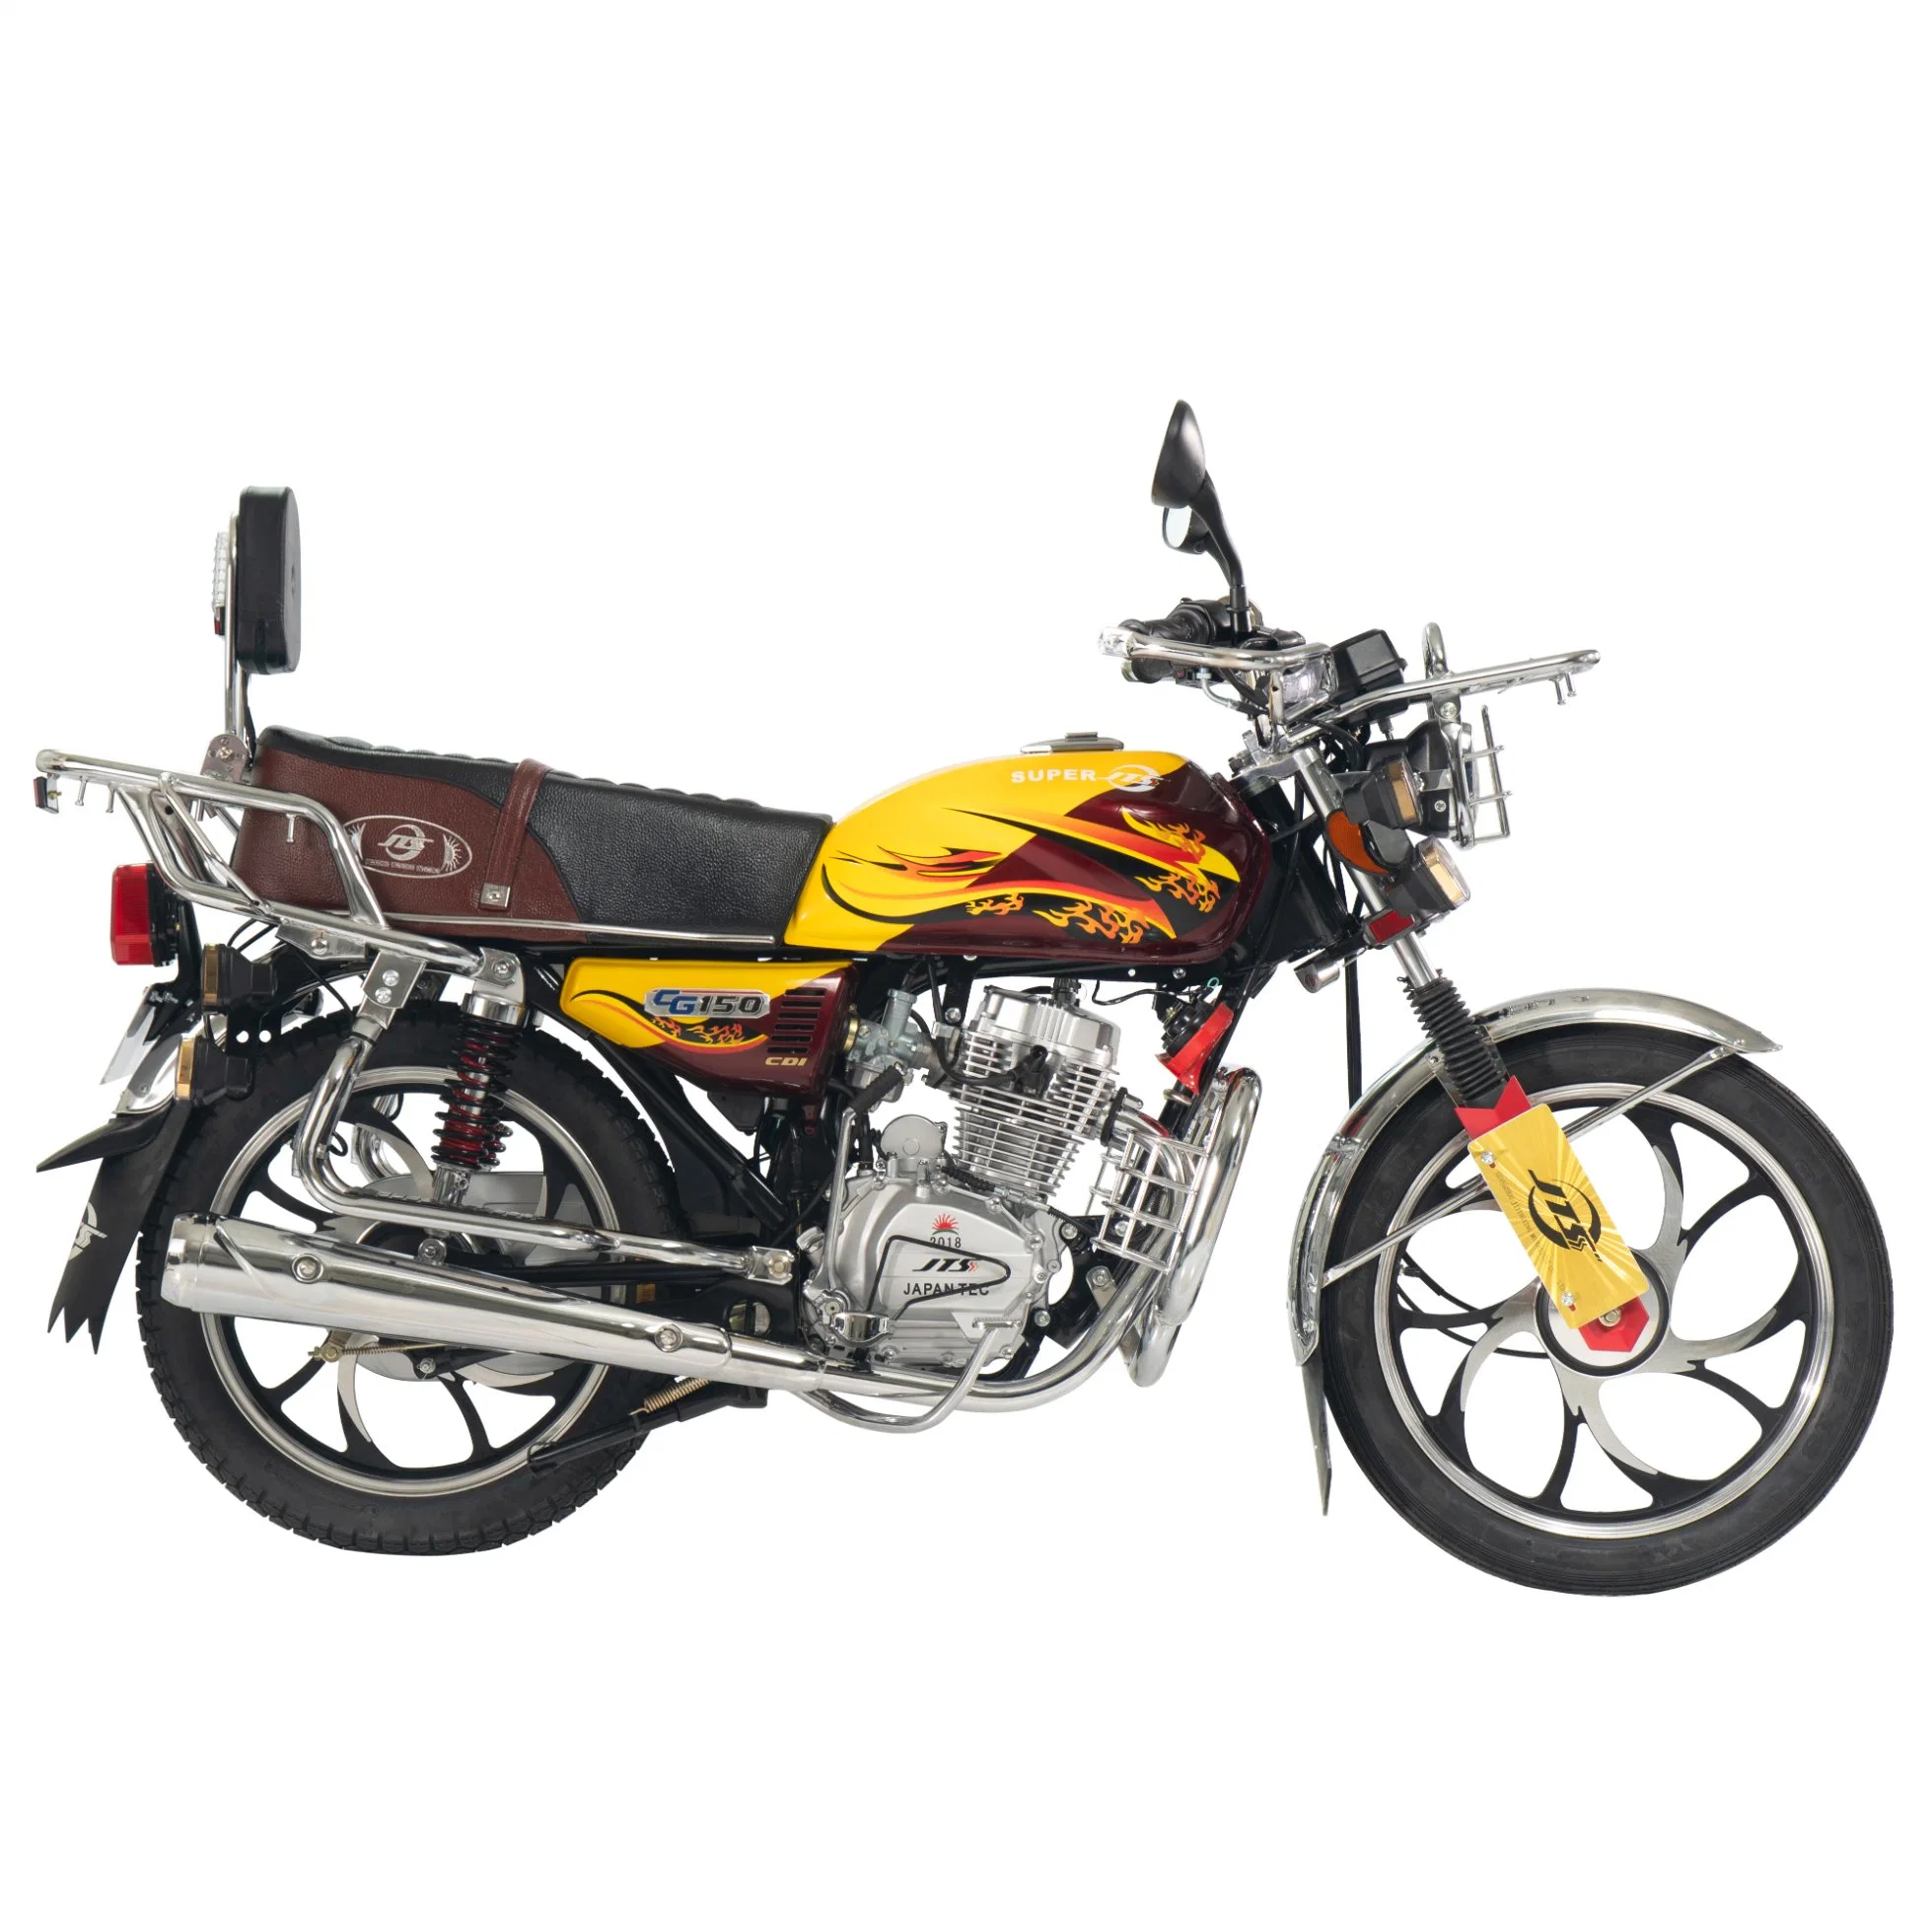 Tigre Cg 150cc moto / 250cc Dirt Bike / Sport moto / Vehículo Eléctrico